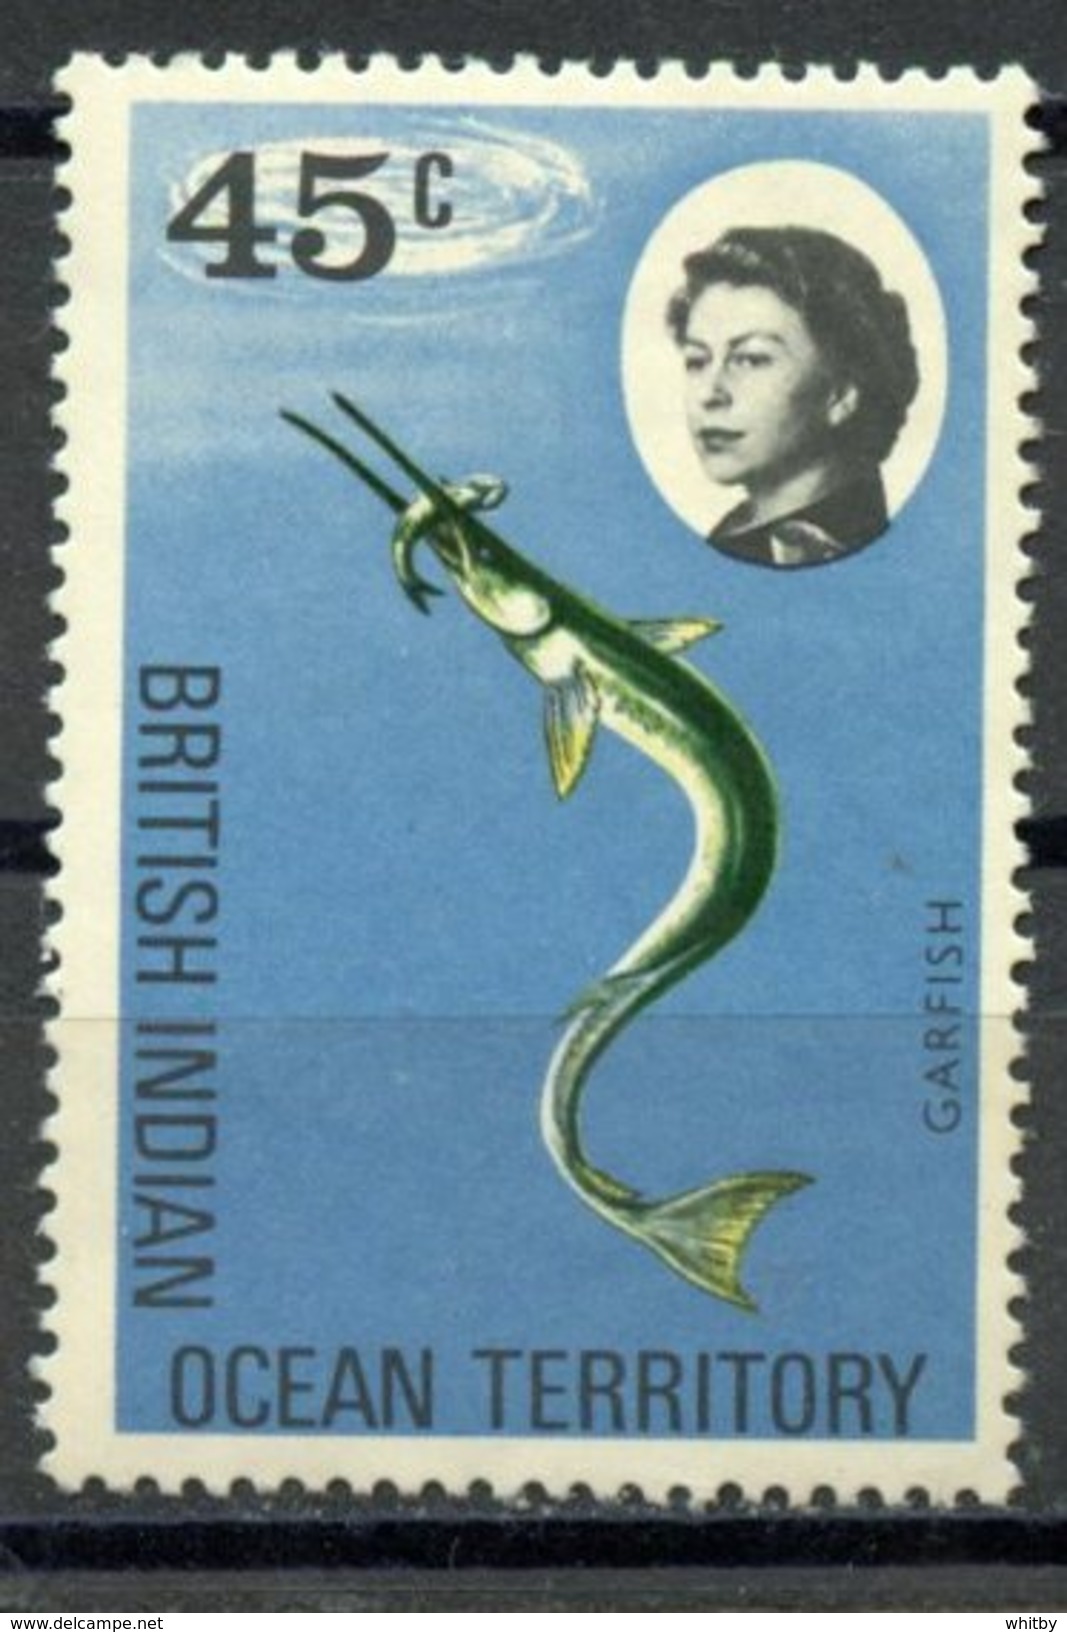 British Indian Ocean Territory1968 45 Cent  Garfish Issue #23  MNH - British Indian Ocean Territory (BIOT)